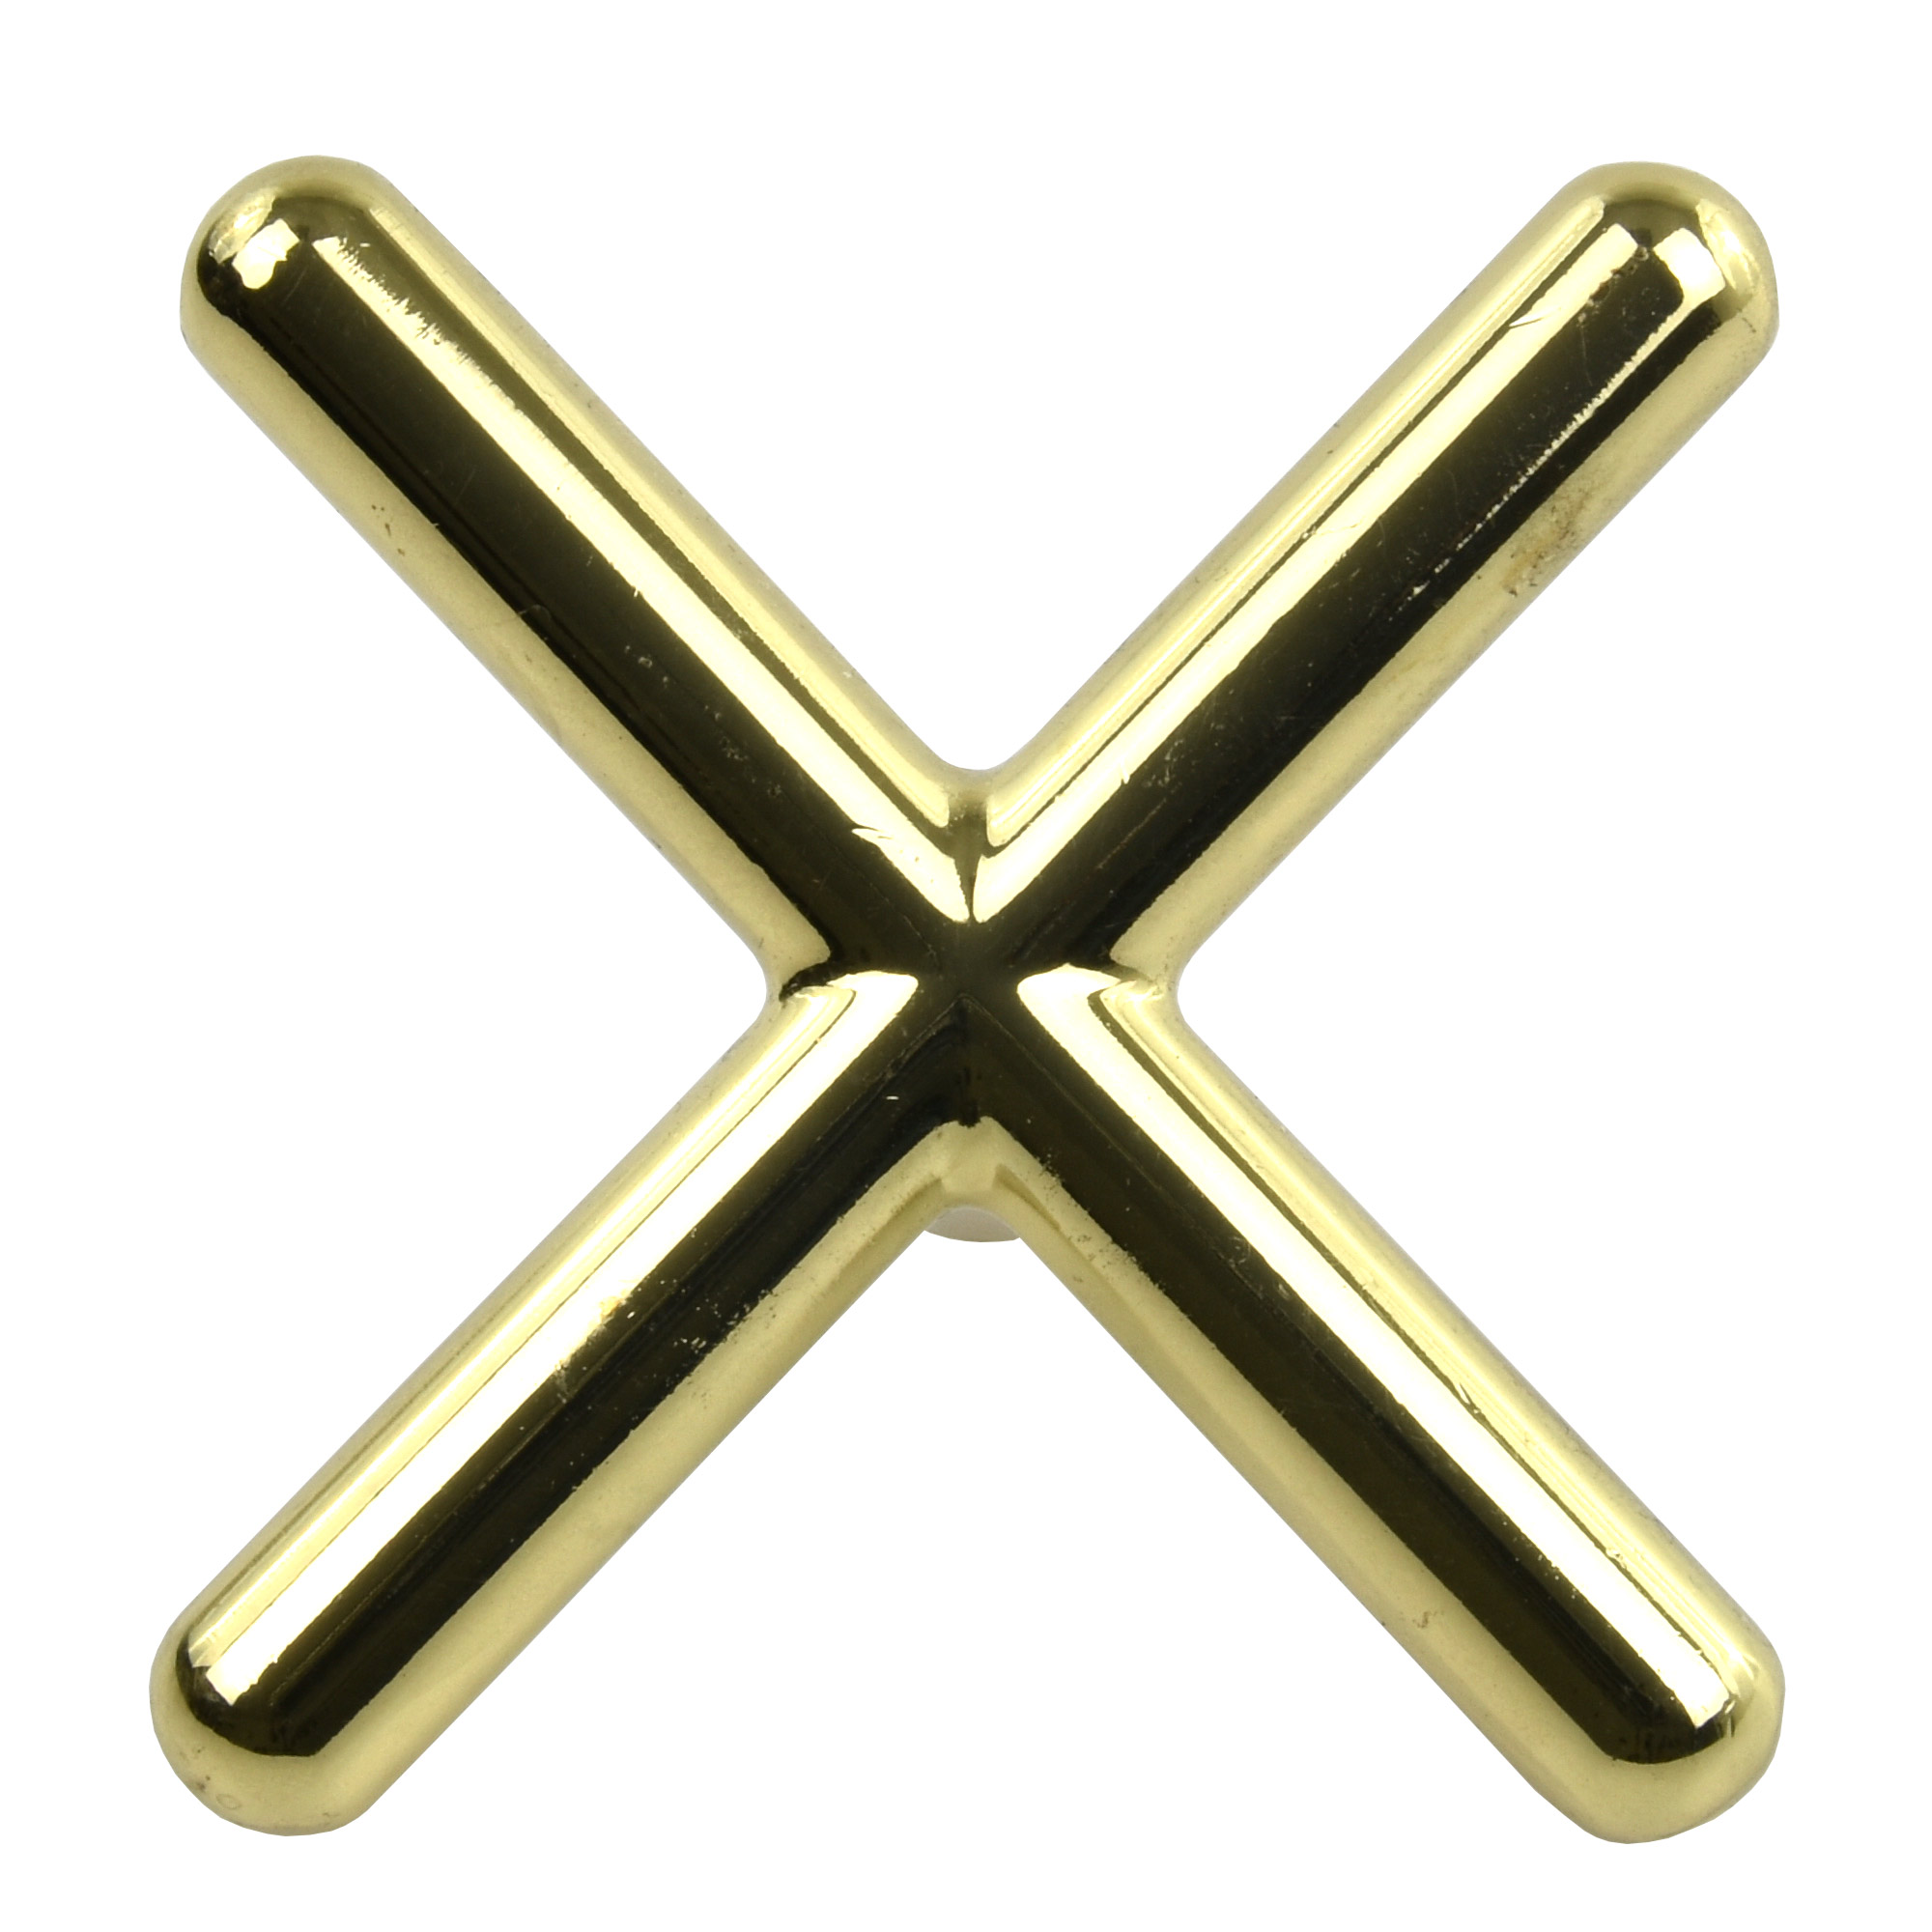 Cue bridge brass cross